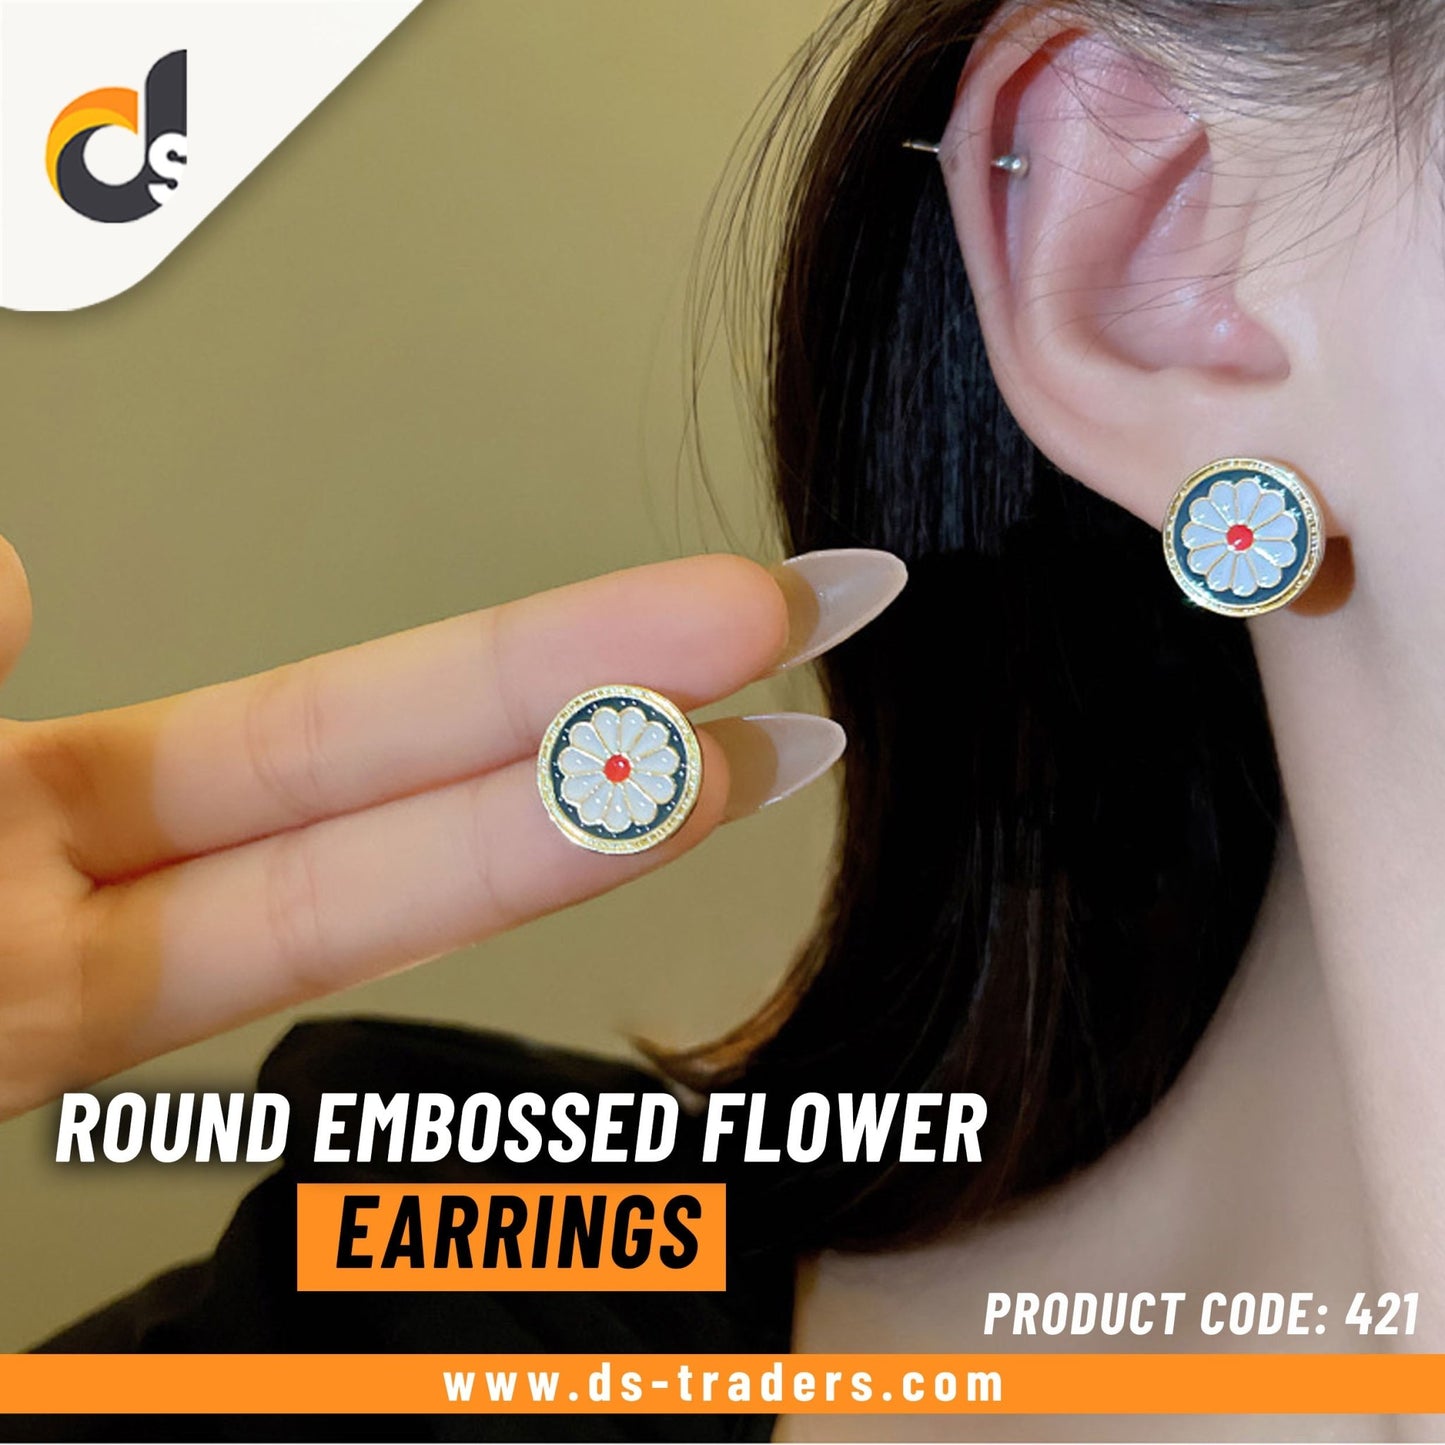 Round Embossed Flower Earrings - DS Traders